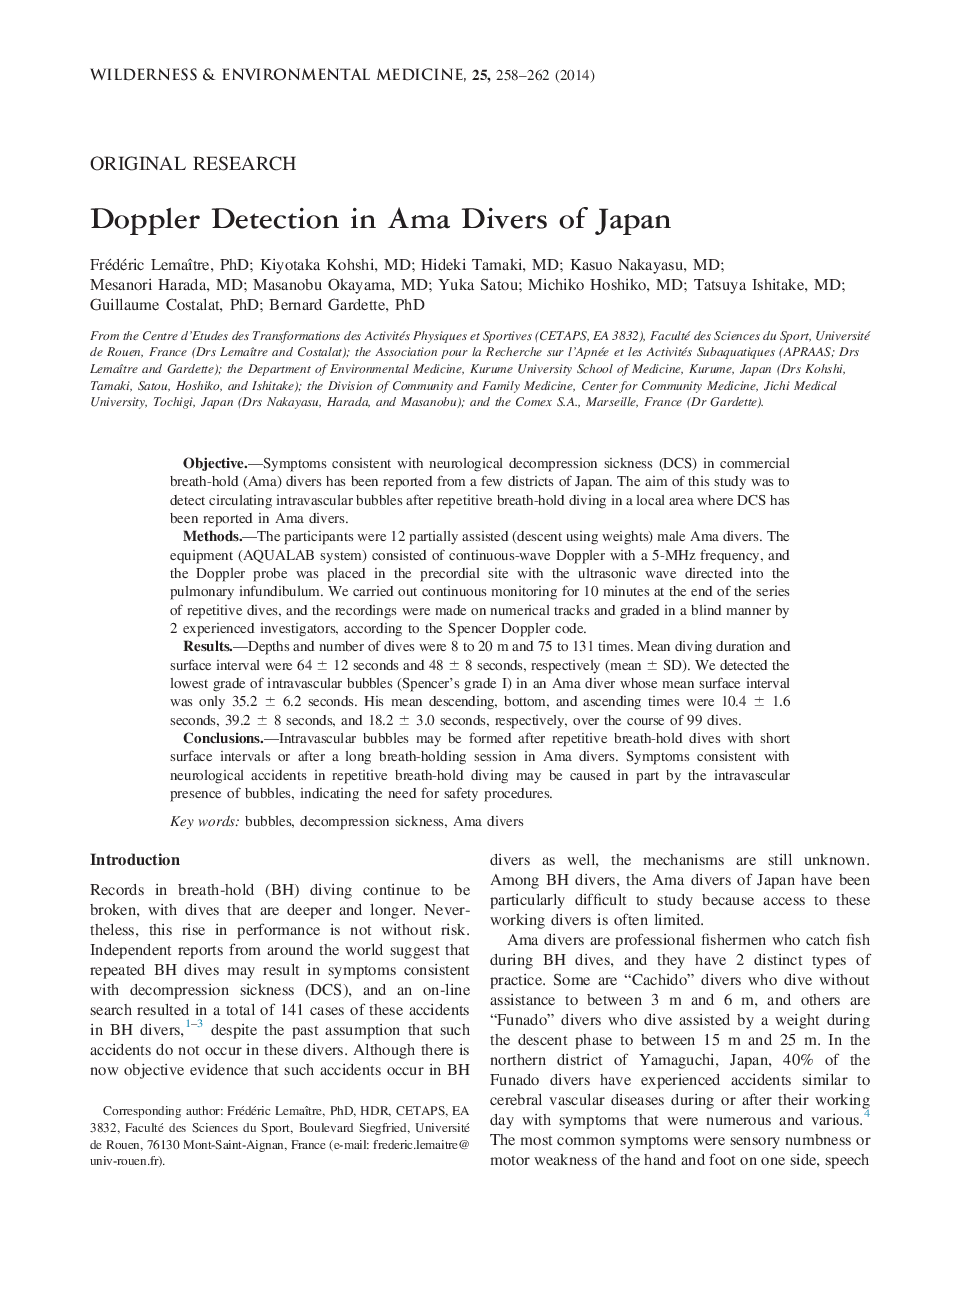 Doppler Detection in Ama Divers of Japan